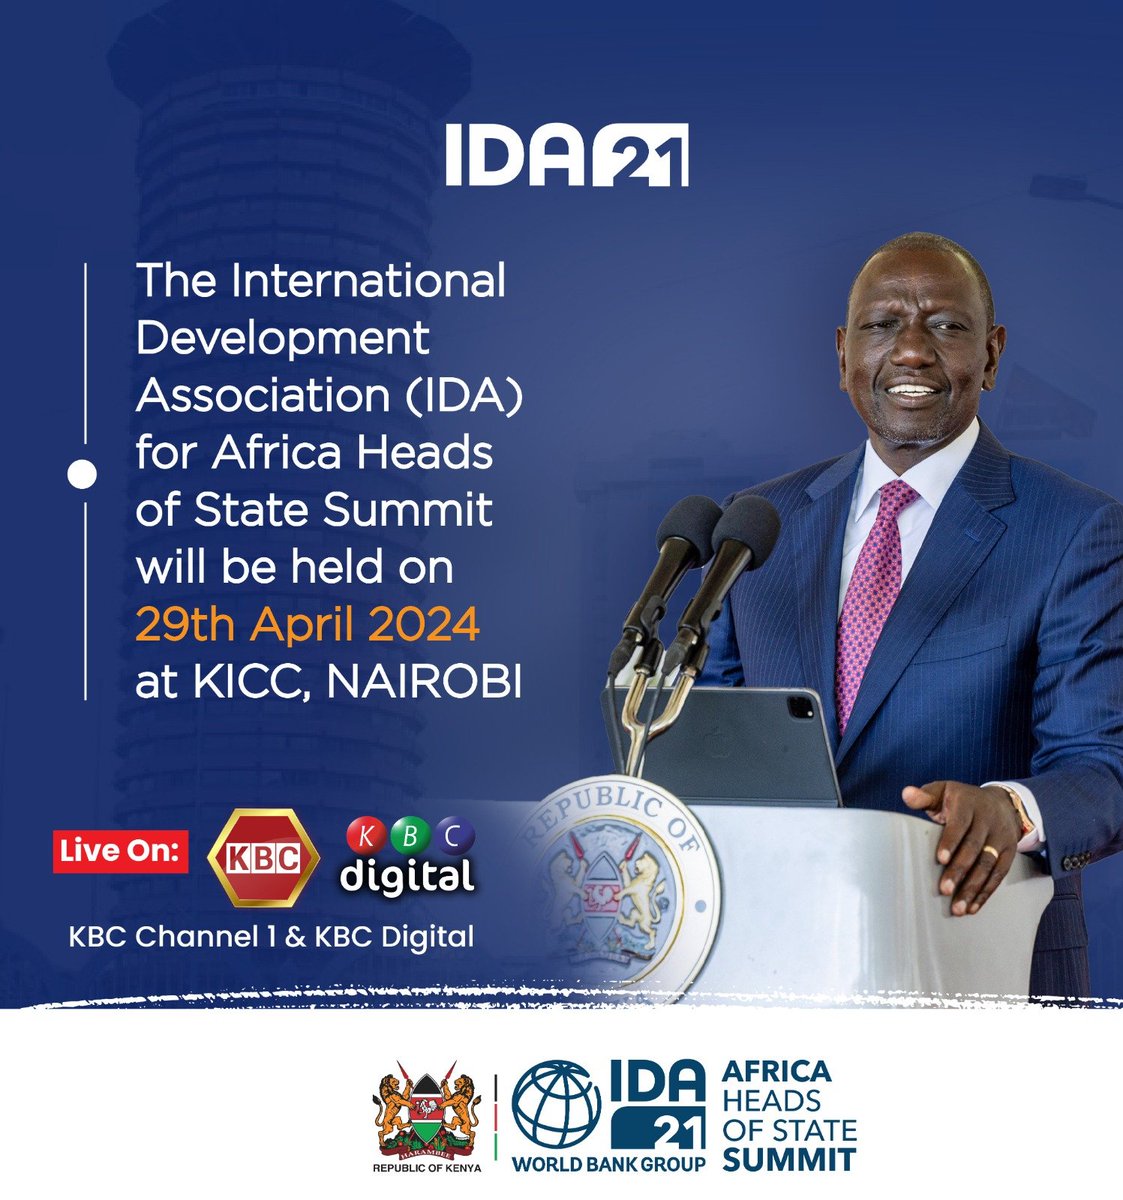 Tune in ! International Development Association (IDA21) Africa Heads of State Summit kick-off at KICC, Nairobi kbc.co.ke/live/ #idaworks #ida21nairobi #kenya #KBCniYetu^EM